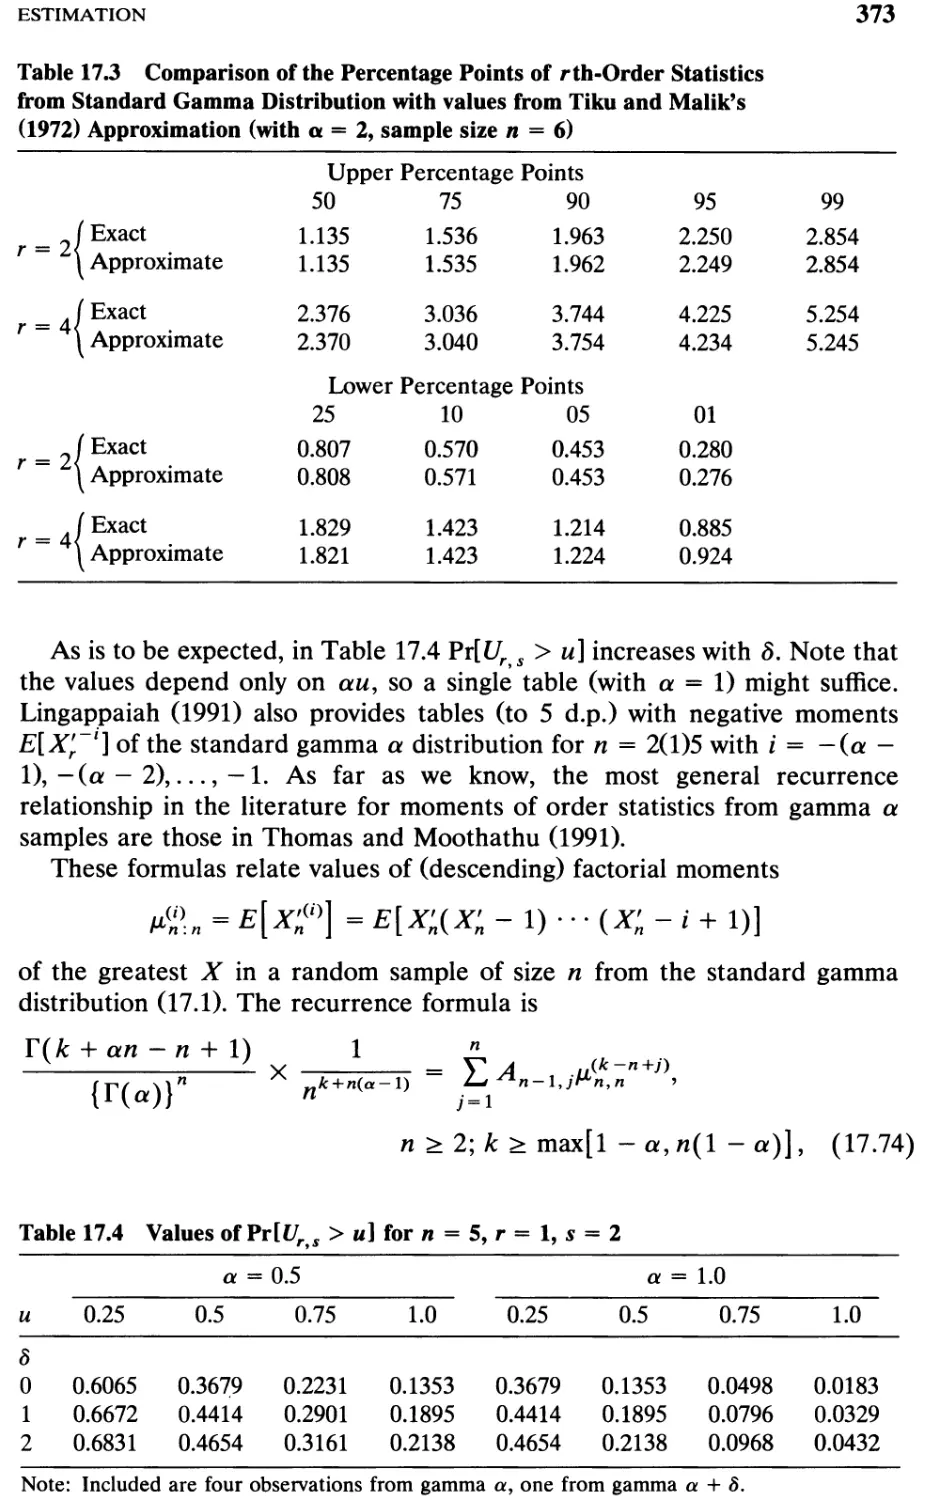 TABLE 17.4 Values of Pr[Ur s > u] forn = 5, r = 1, 5 = 2 373